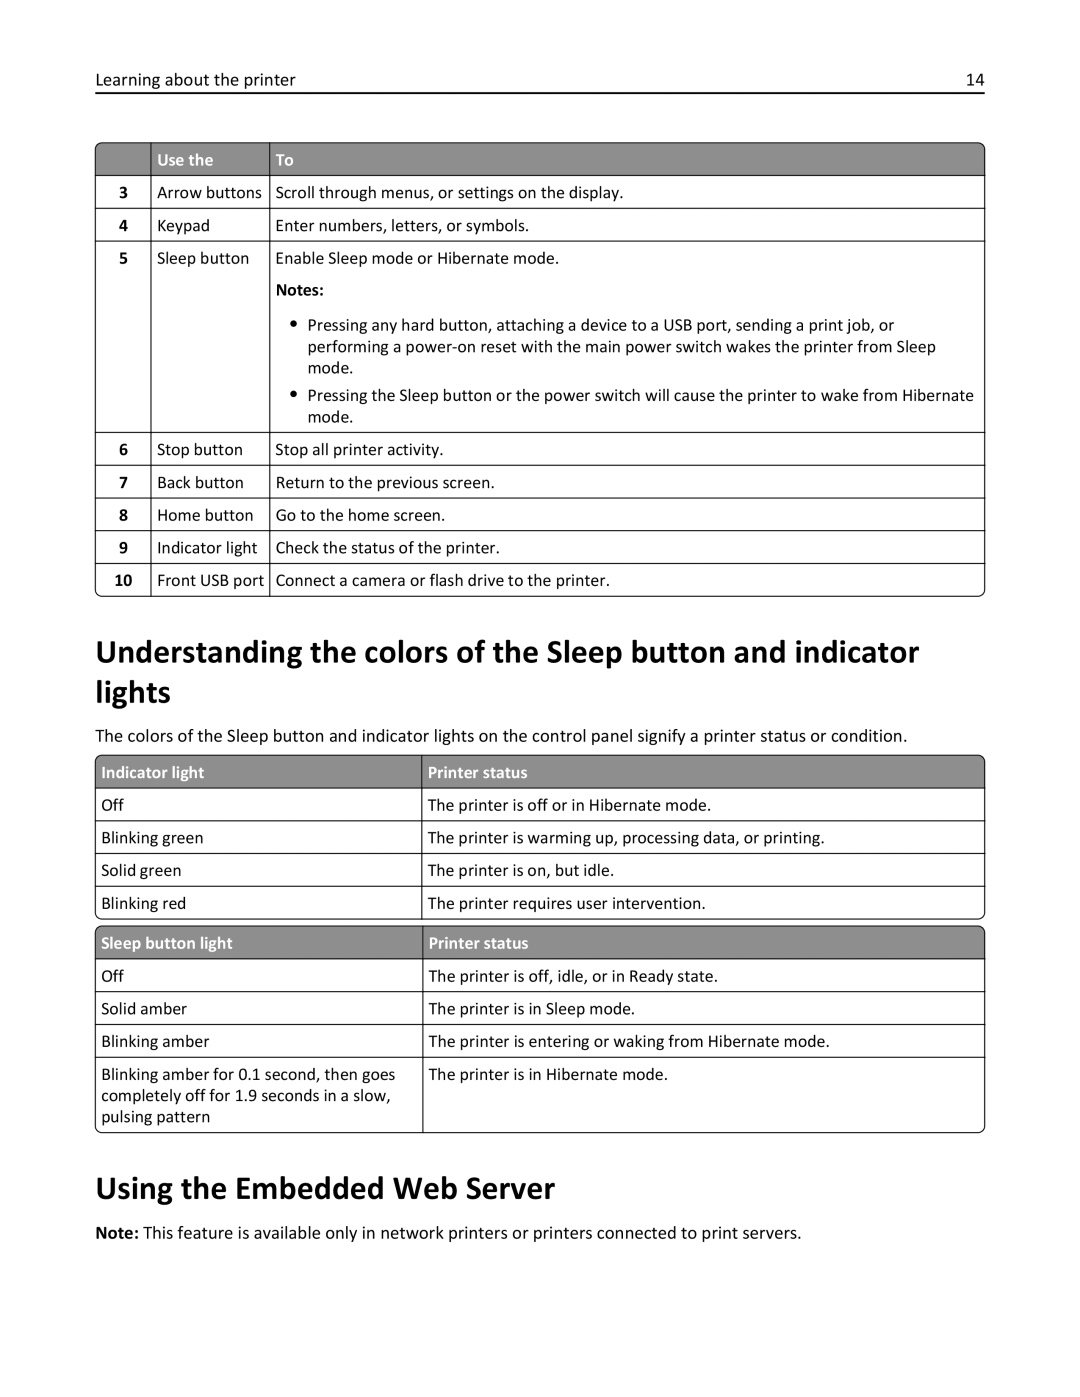 Lexmark CS410 manual Using the Embedded Web Server, Indicator light Printer status, Sleep button light Printer status 